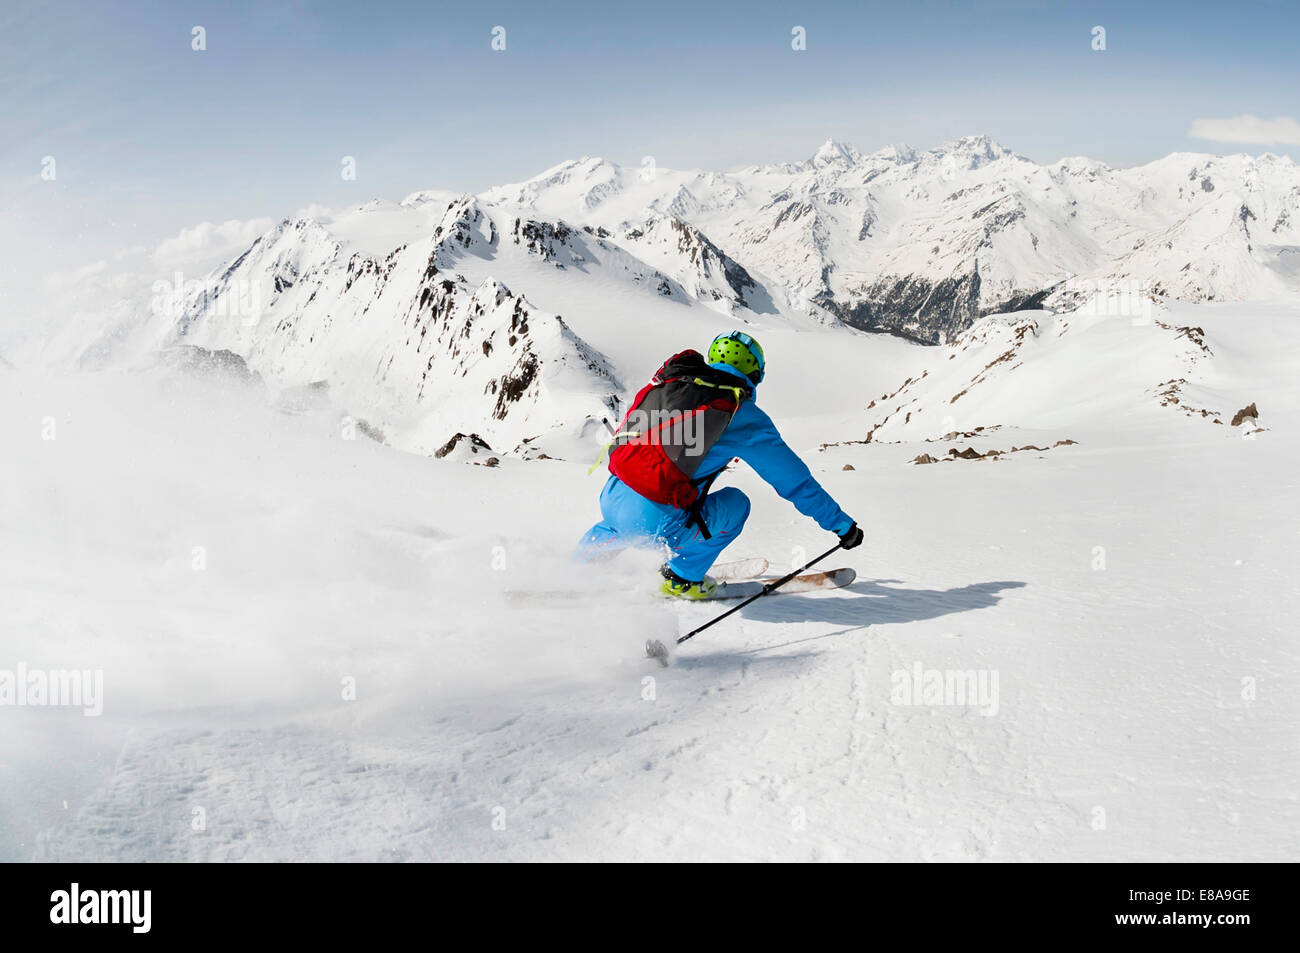 Man skier skiing downhill steep slope mountains Stock Photo